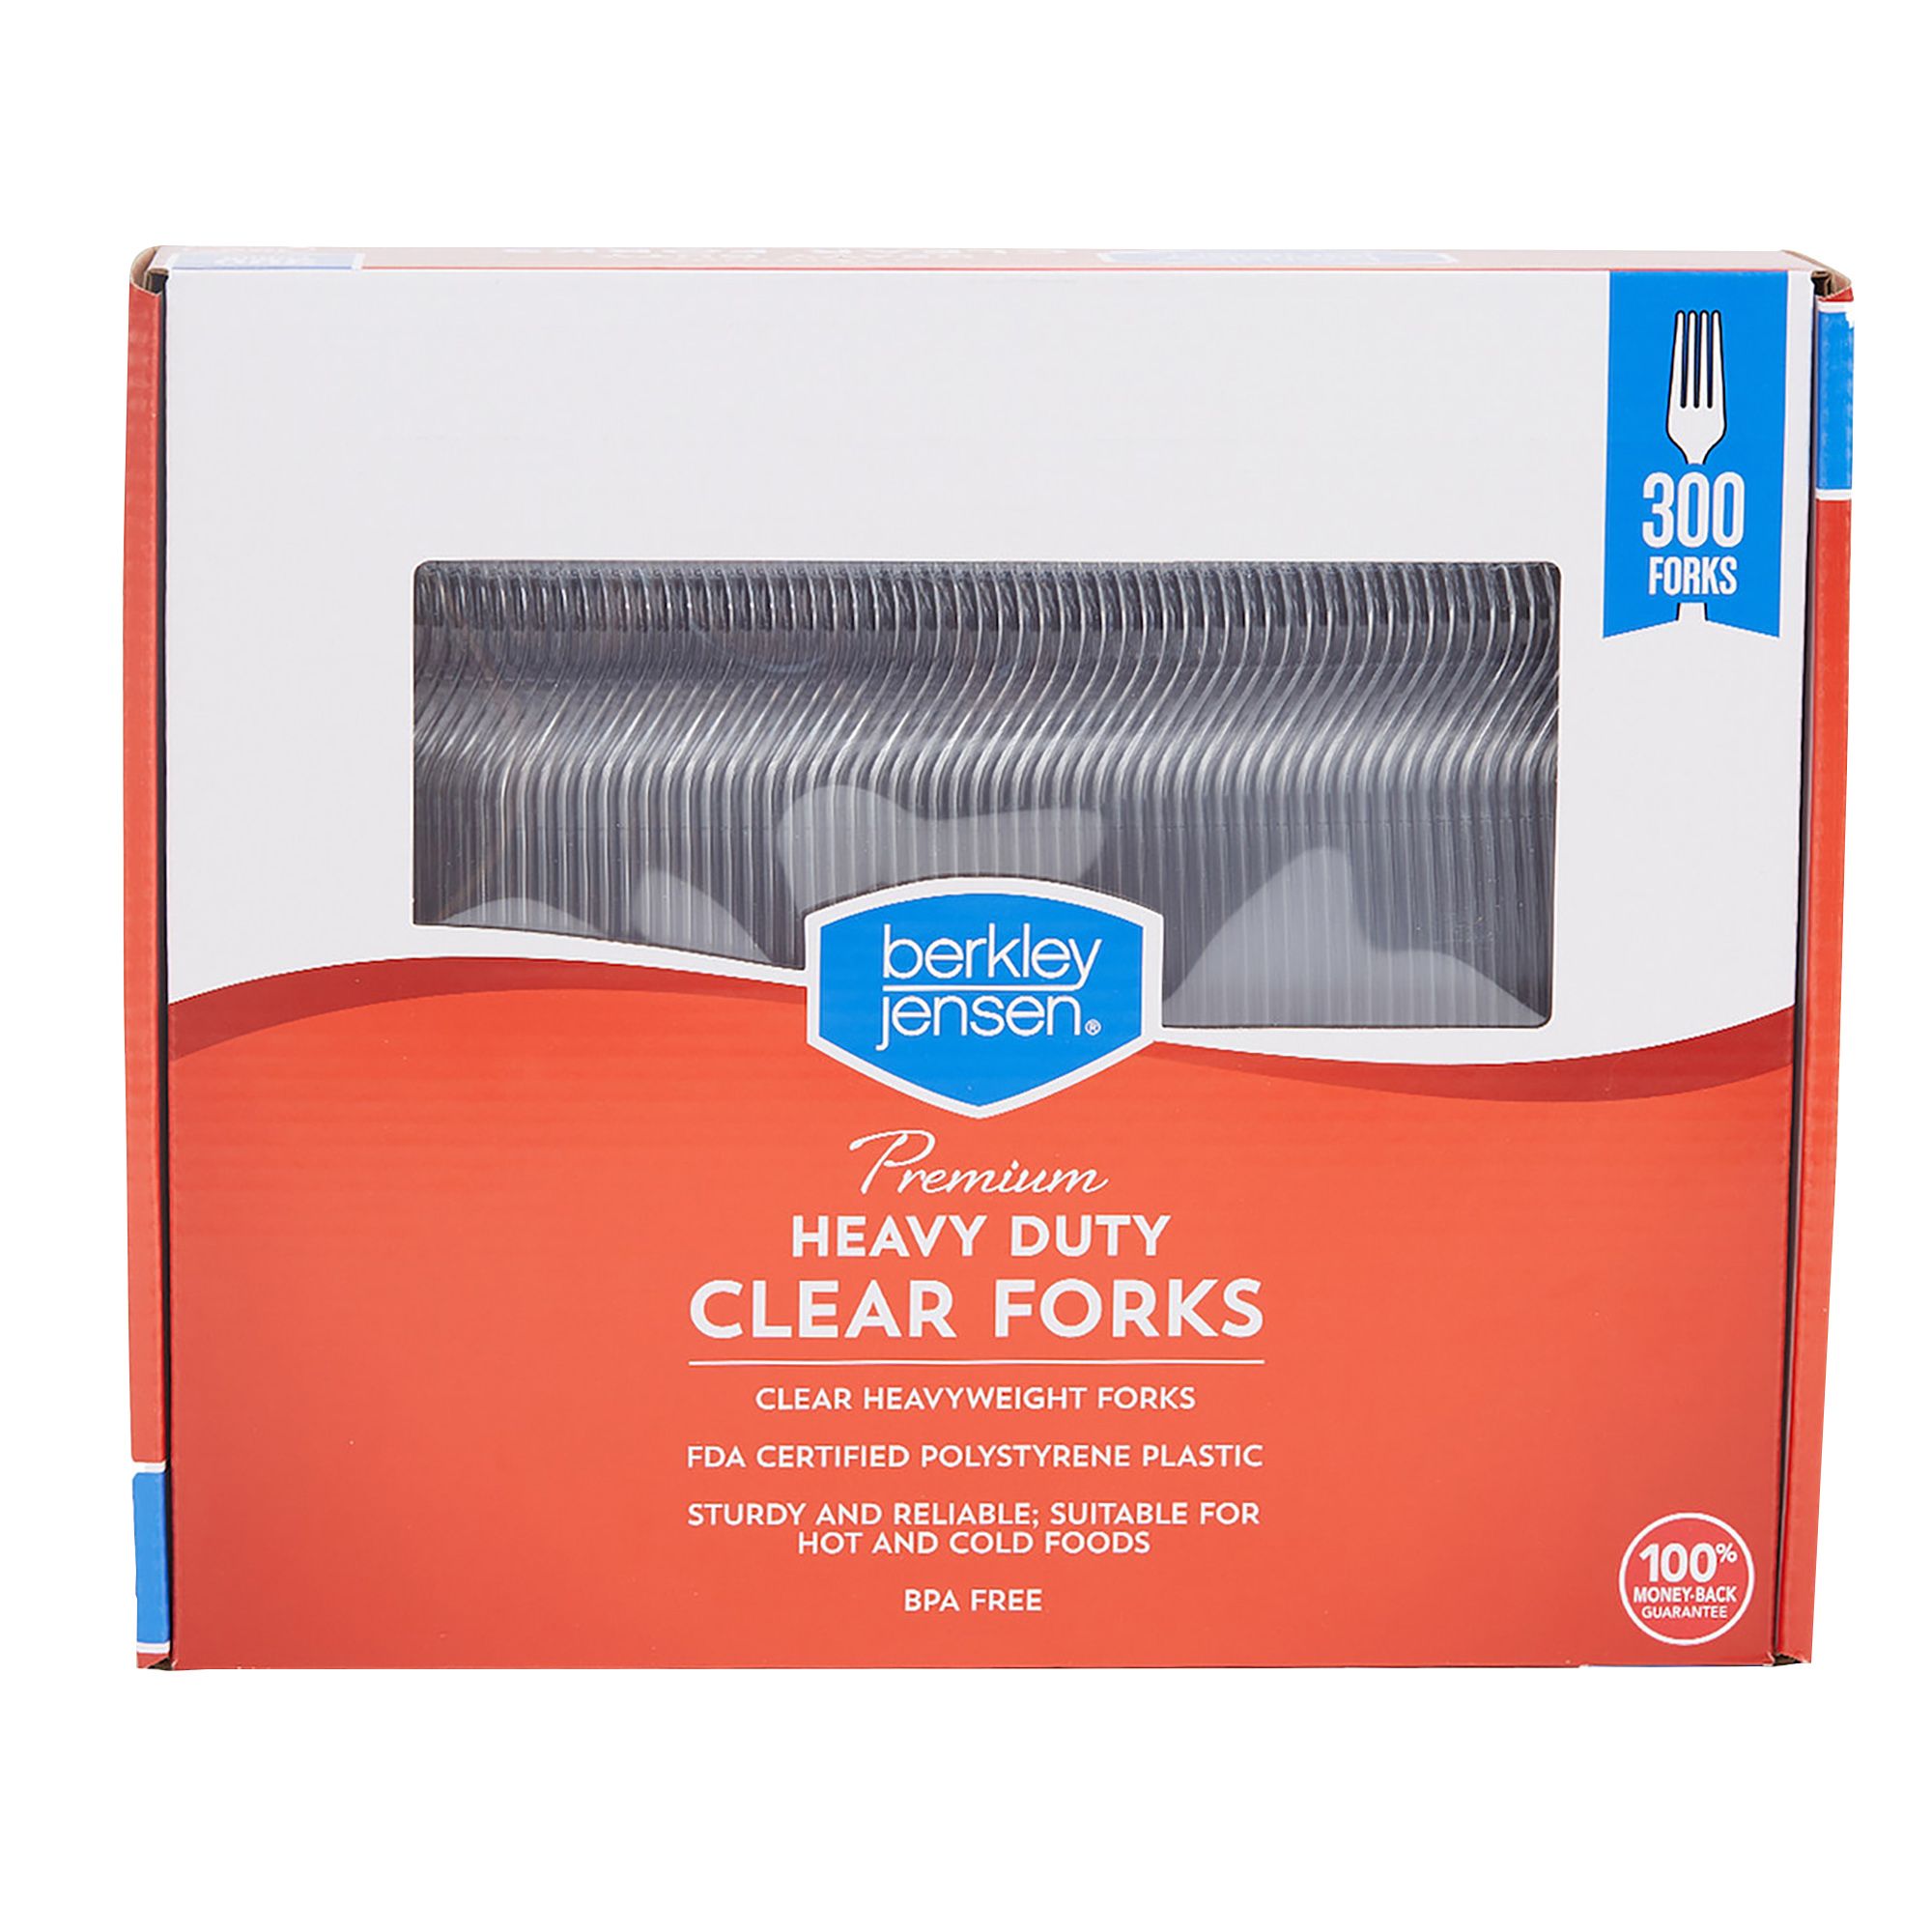 Berkley Jensen Plastic Forks, 300 ct. - Clear